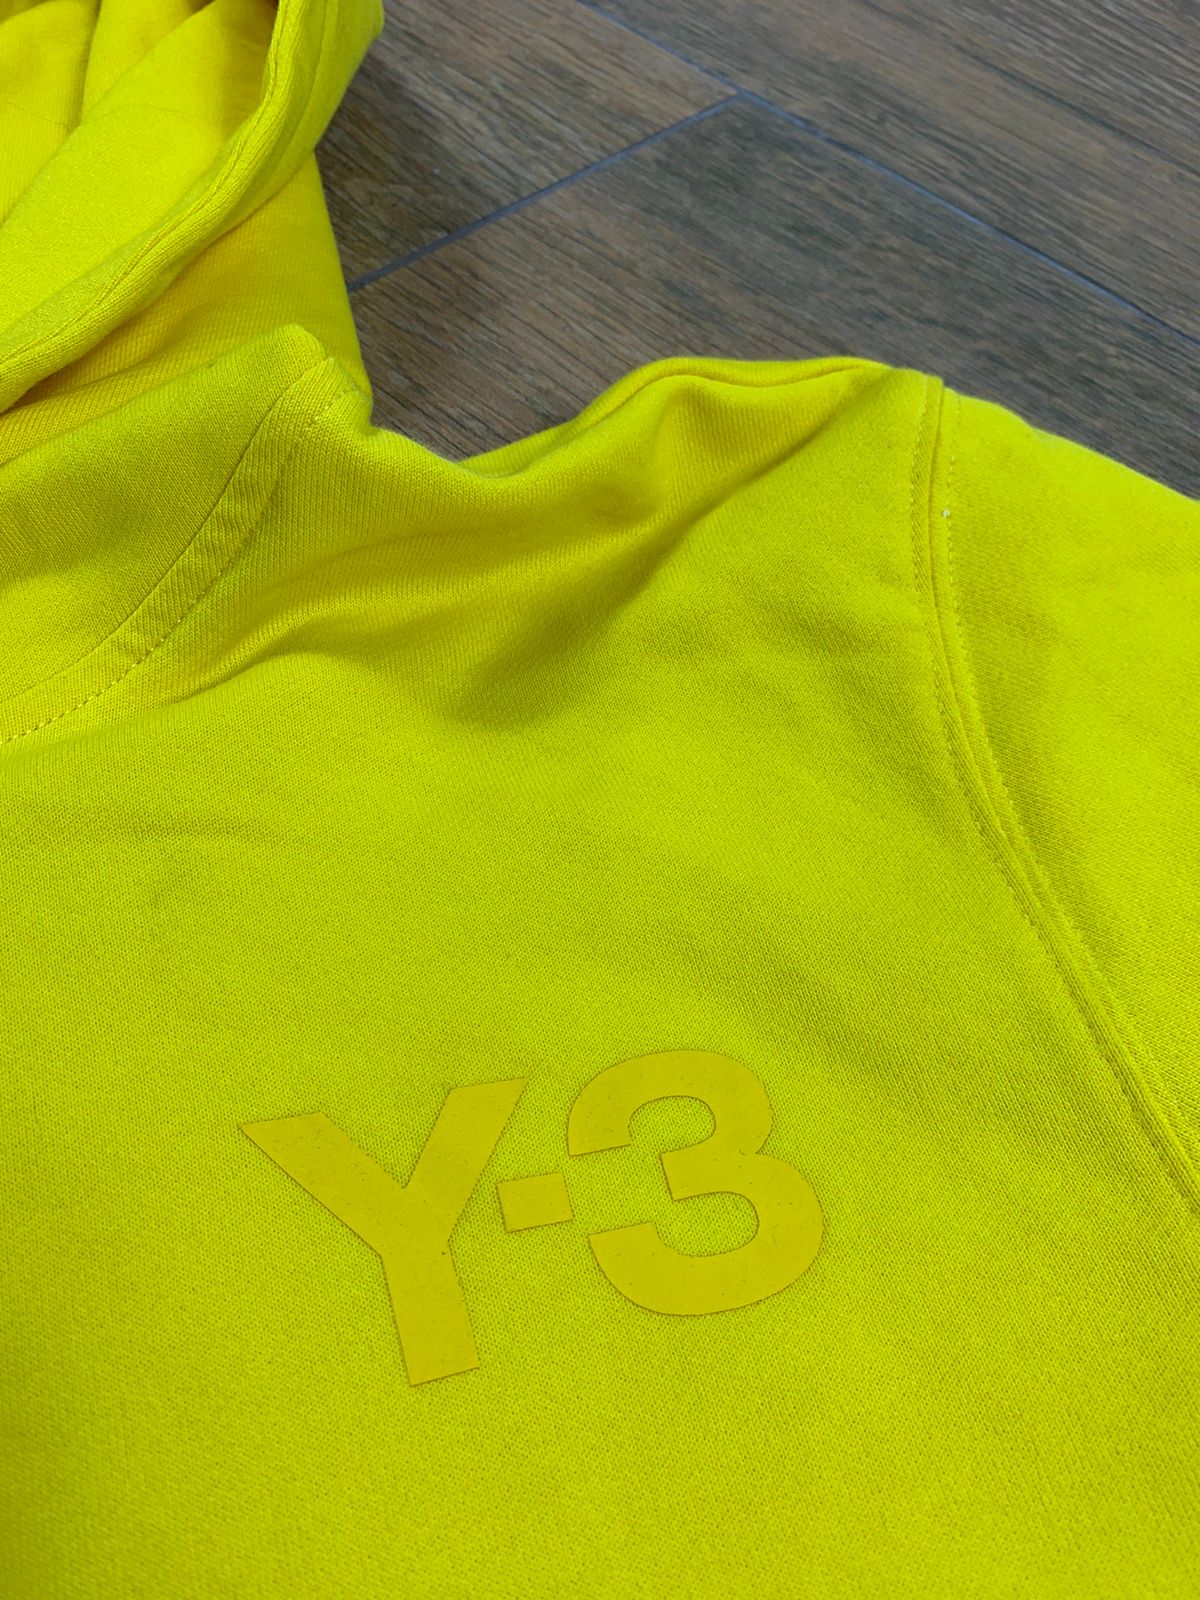 Adidas Adidas Y-3 Yoshi Yamamoto yellow hoodie Size US L / EU 52-54 / 3 - 2 Preview